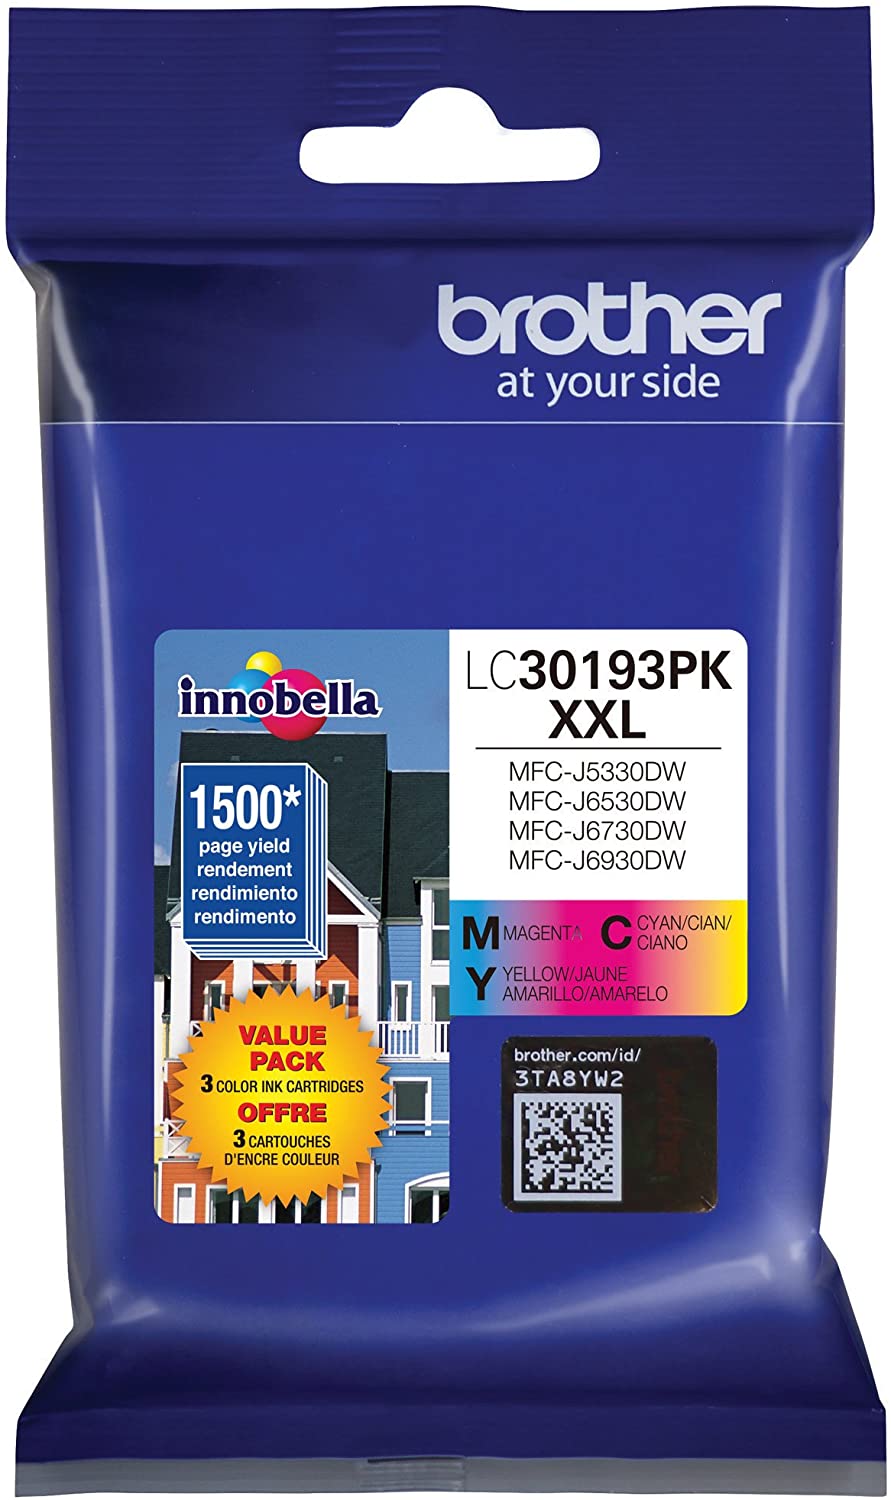 Absolute Toner Genuine Brother LC30193PK Super High Yield Ink Cartridge Cyan Magenta Yellow-3 pack Original Brother Cartridges